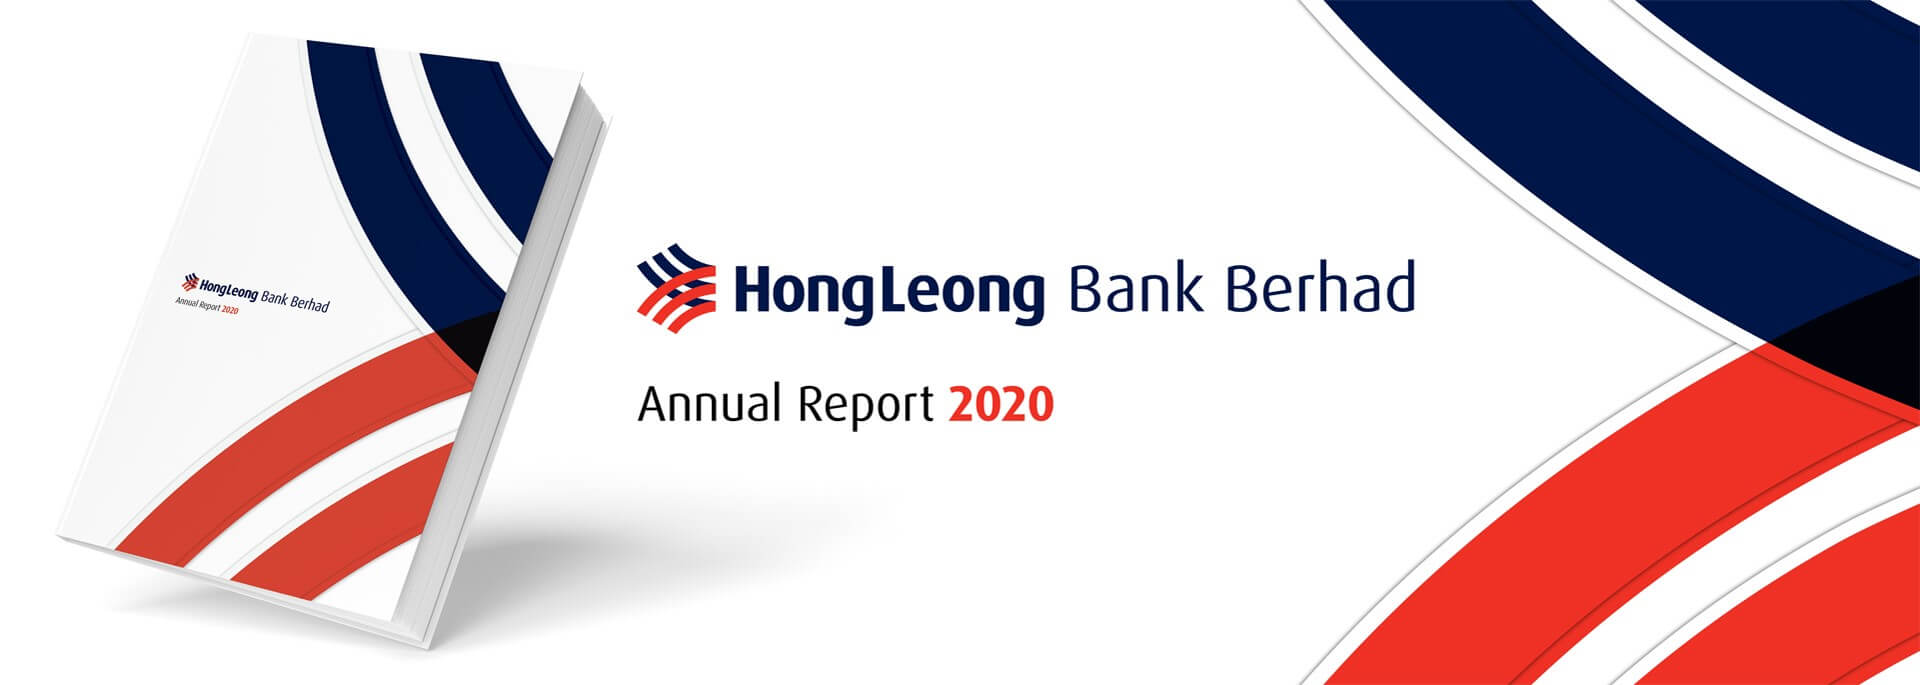 Hong Leong Bank - Annual & Quarterly Financial Reports